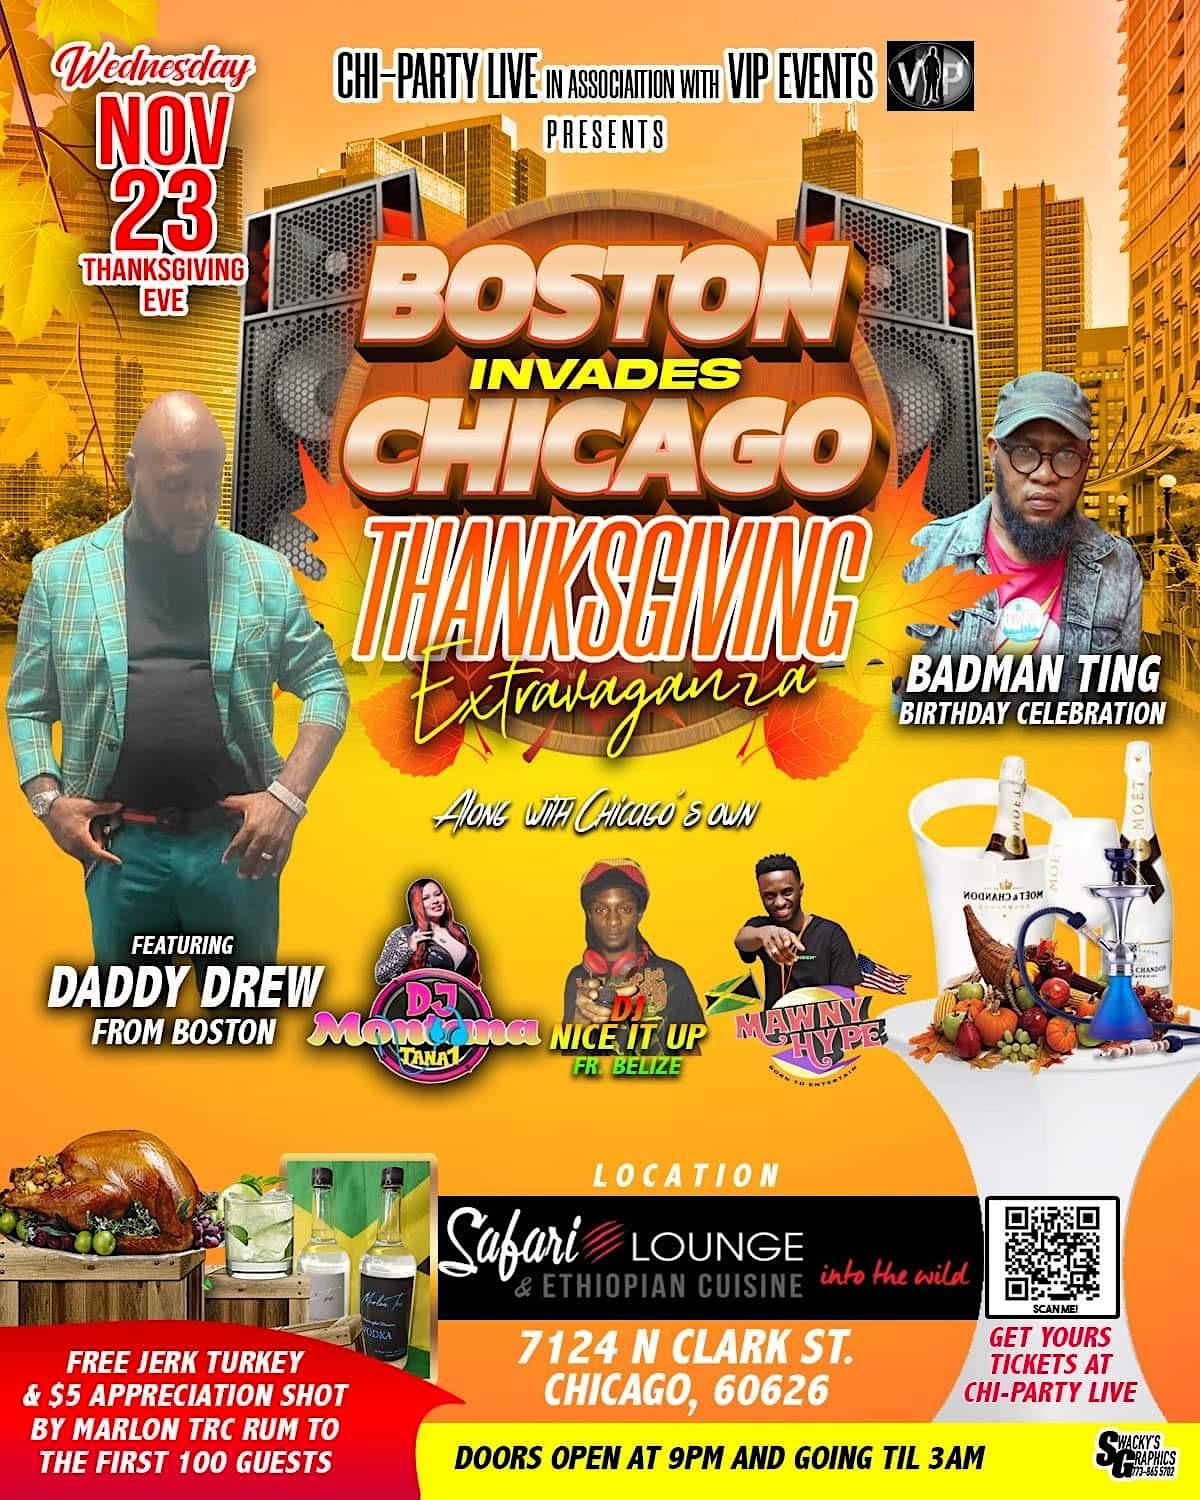 Boston Invades Chicago Pre-Thanksgiving Extravaganza!!
Wed Nov 23, 9:00 PM - Thu Nov 24, 3:00 AM
in 19 days